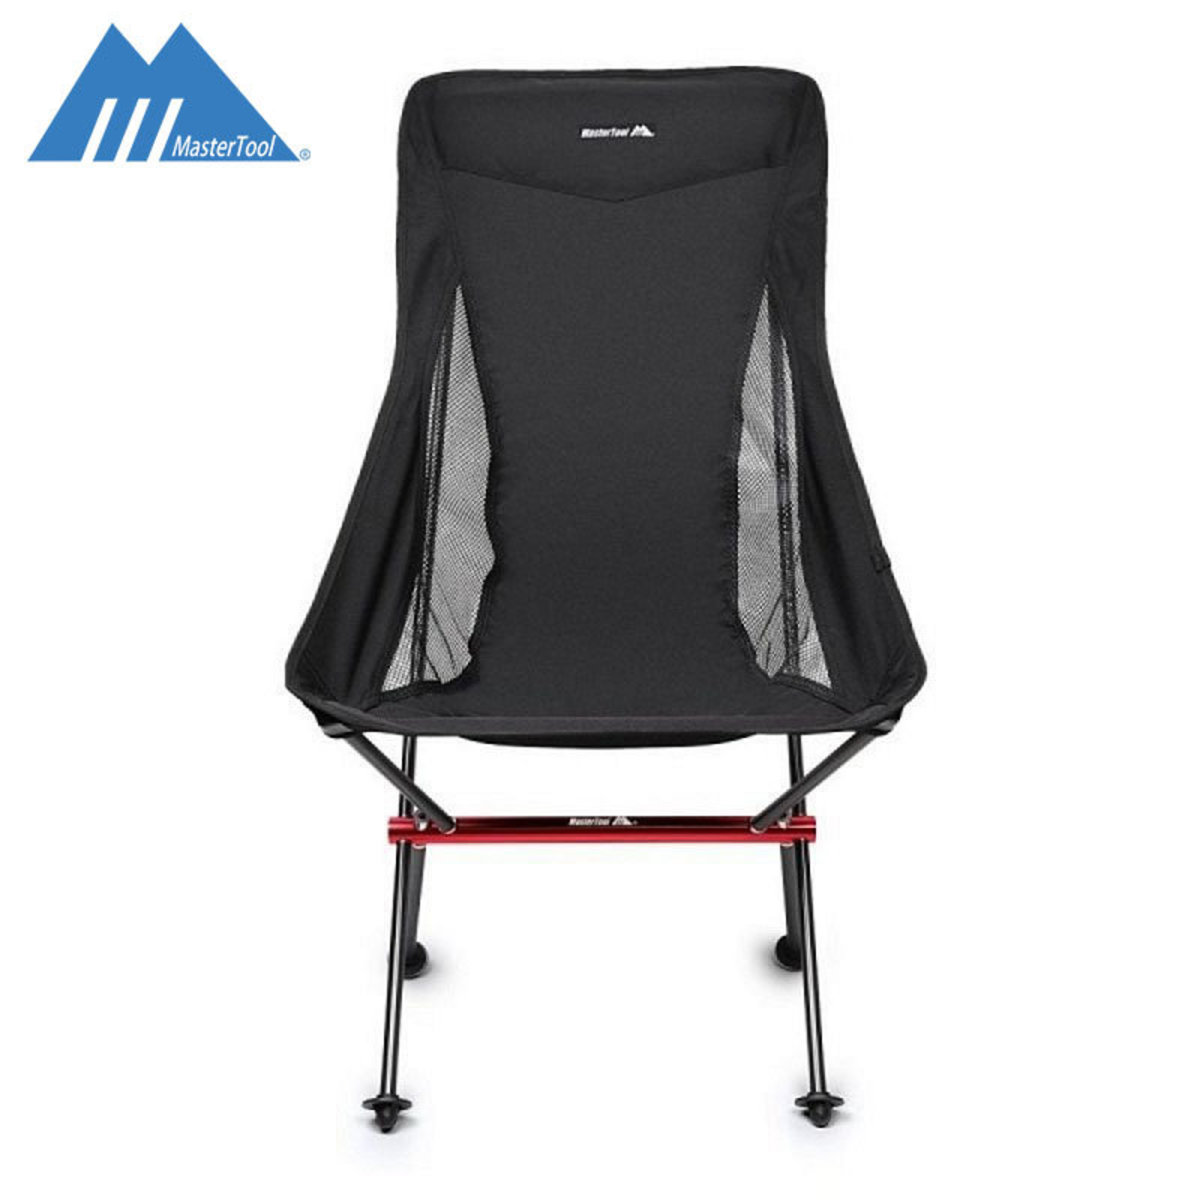 MasterTool - Lightweight Folding High Back Camping Outdoor Chair with Headrest (black)